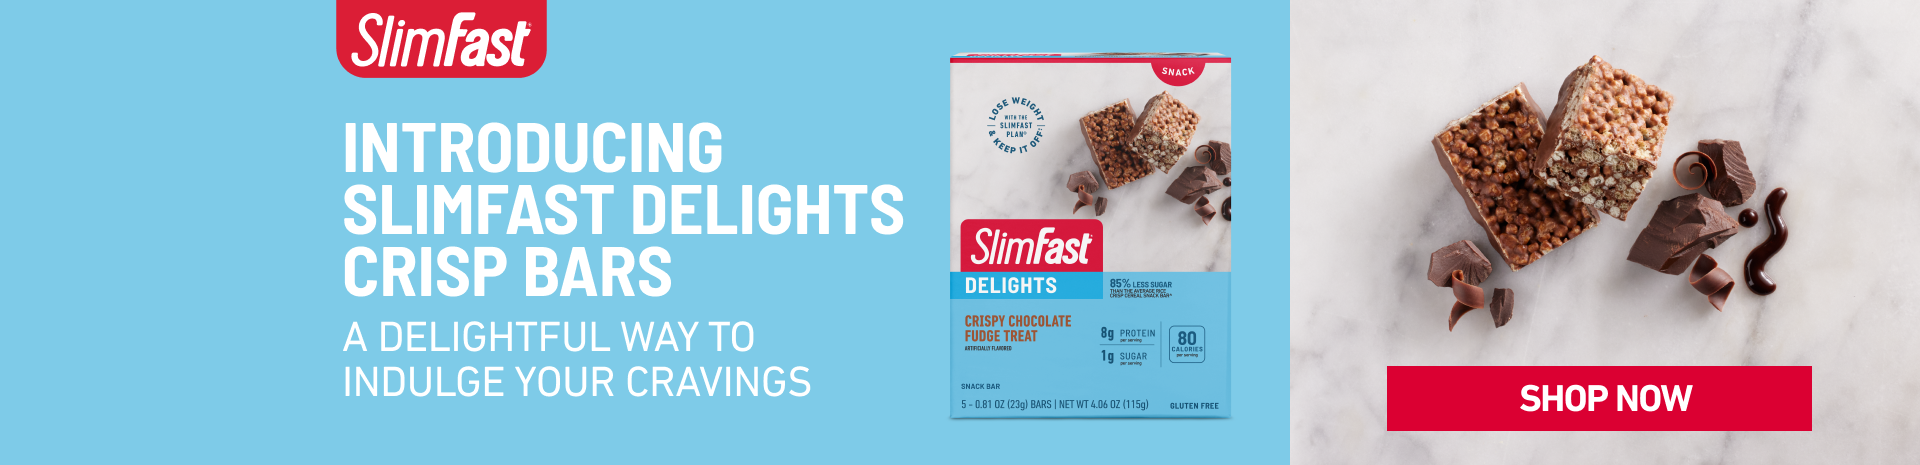 SlimFast Delights Crisp Bars